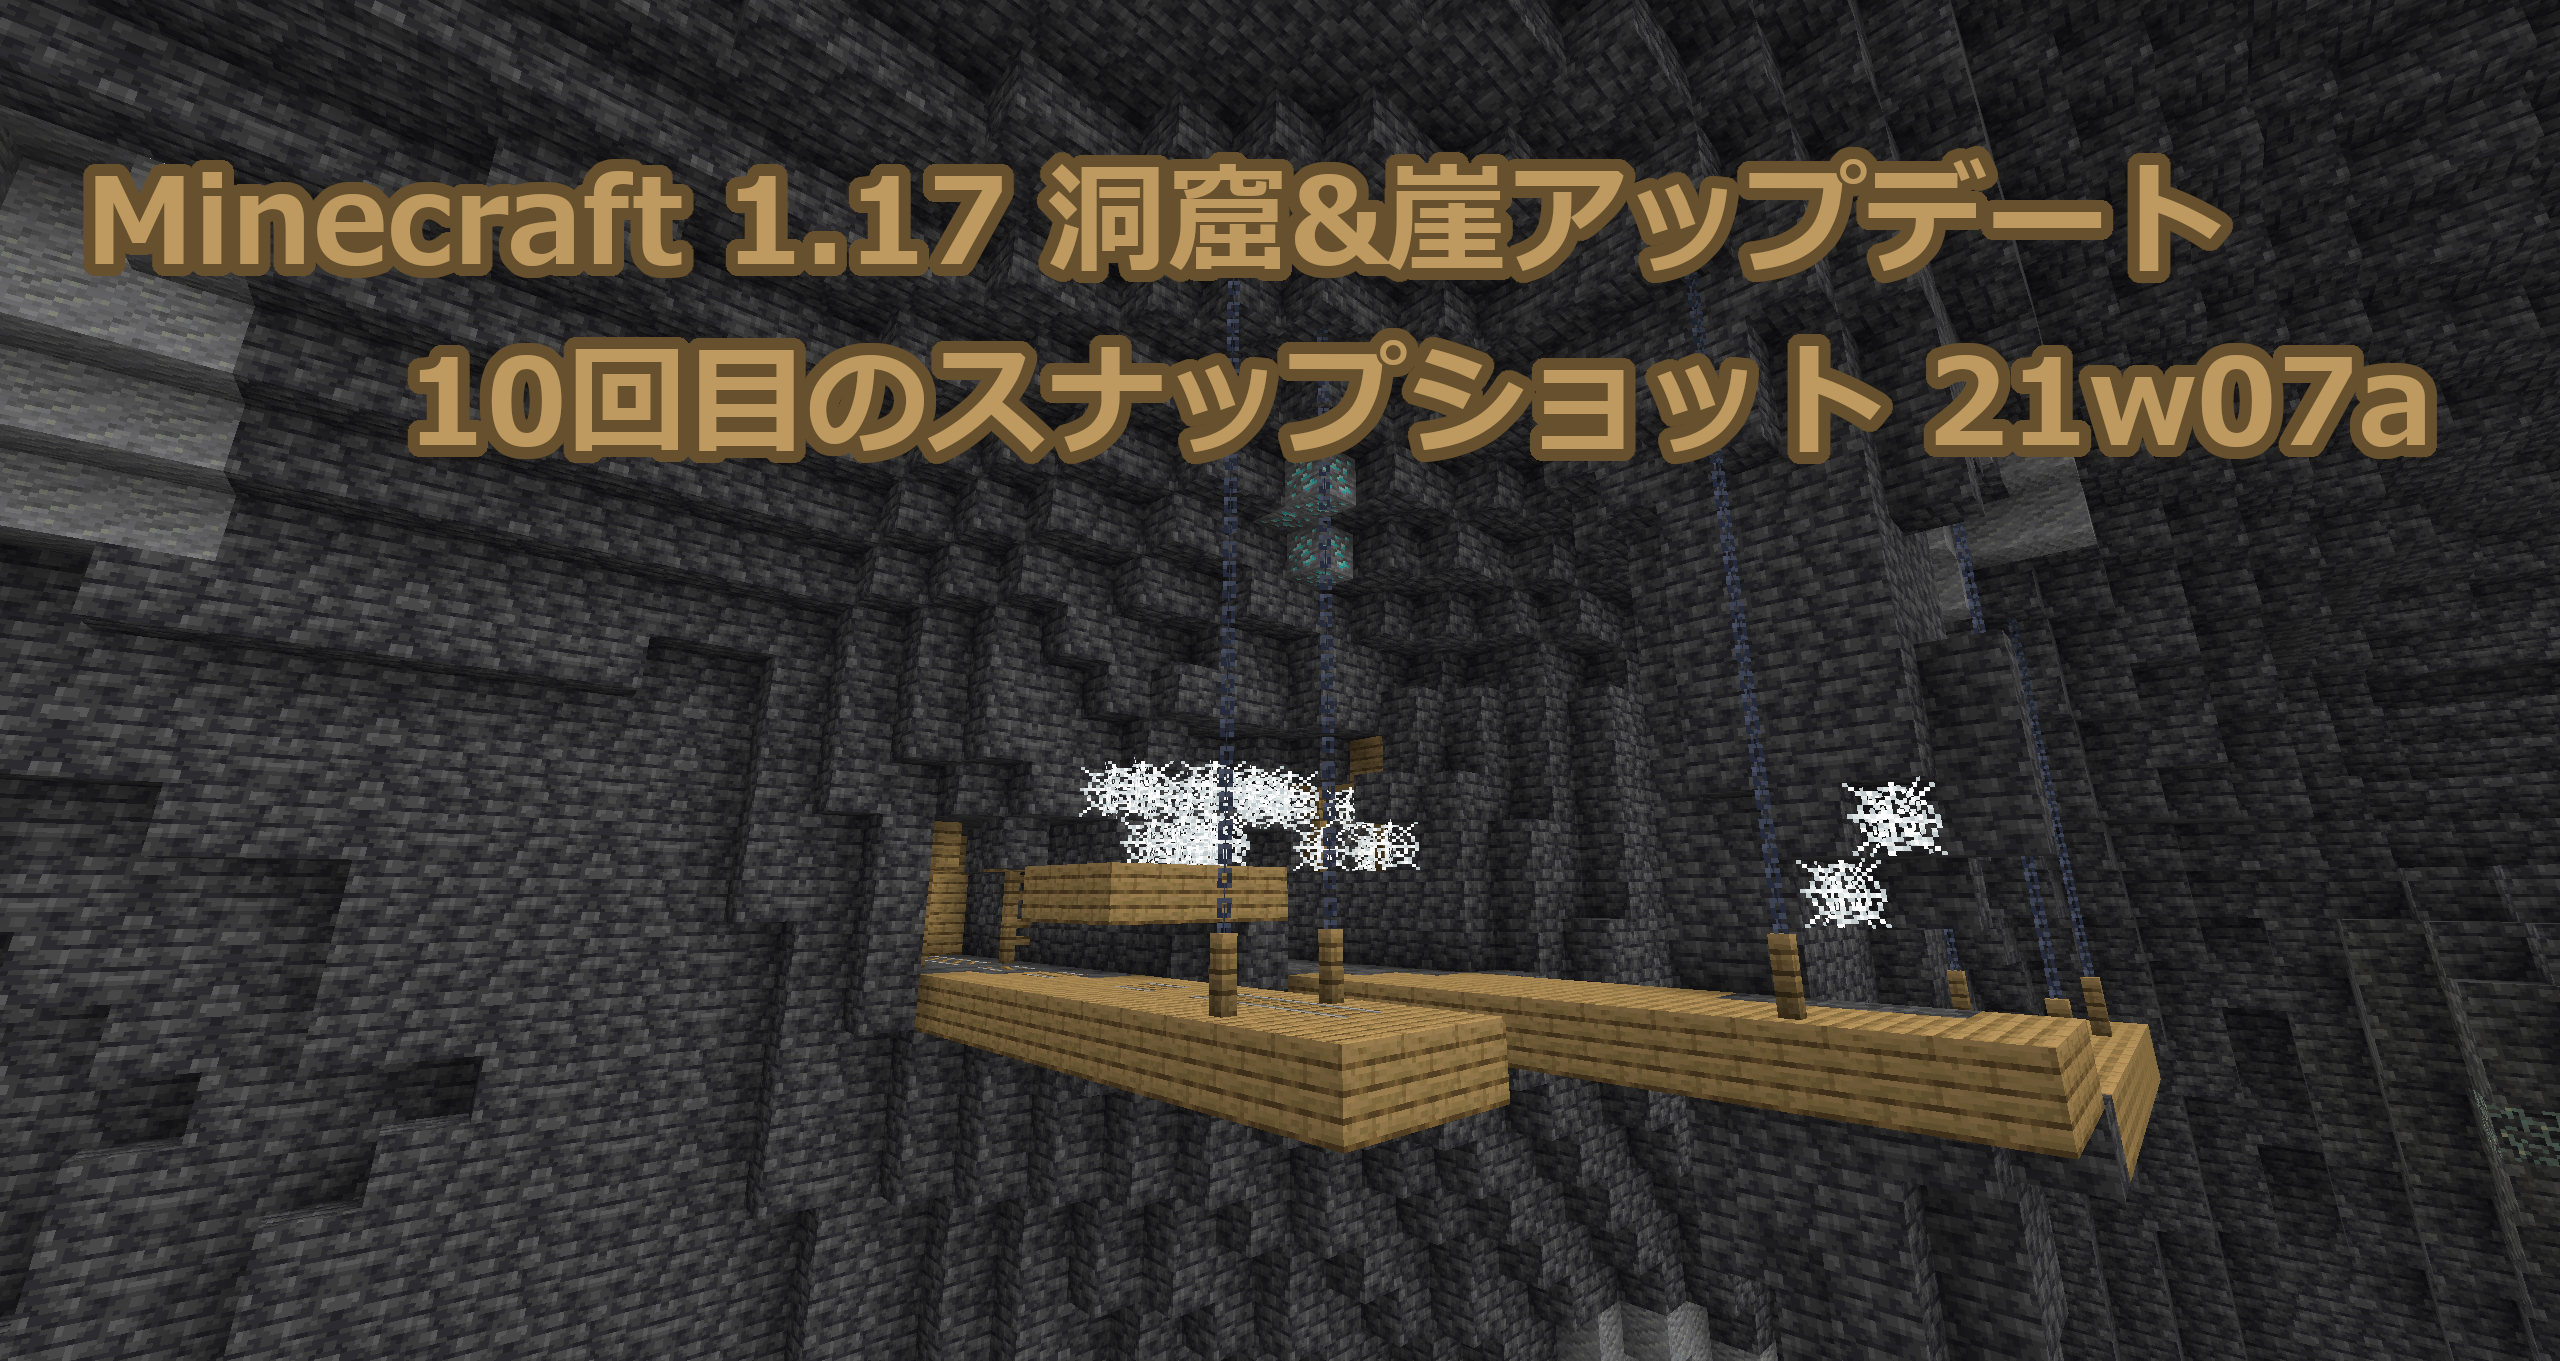 Minecraft 1.17 10回目のスナップショット21w07aリリース情報｜グリムストーンの追加と鉱石テクスチャ変更